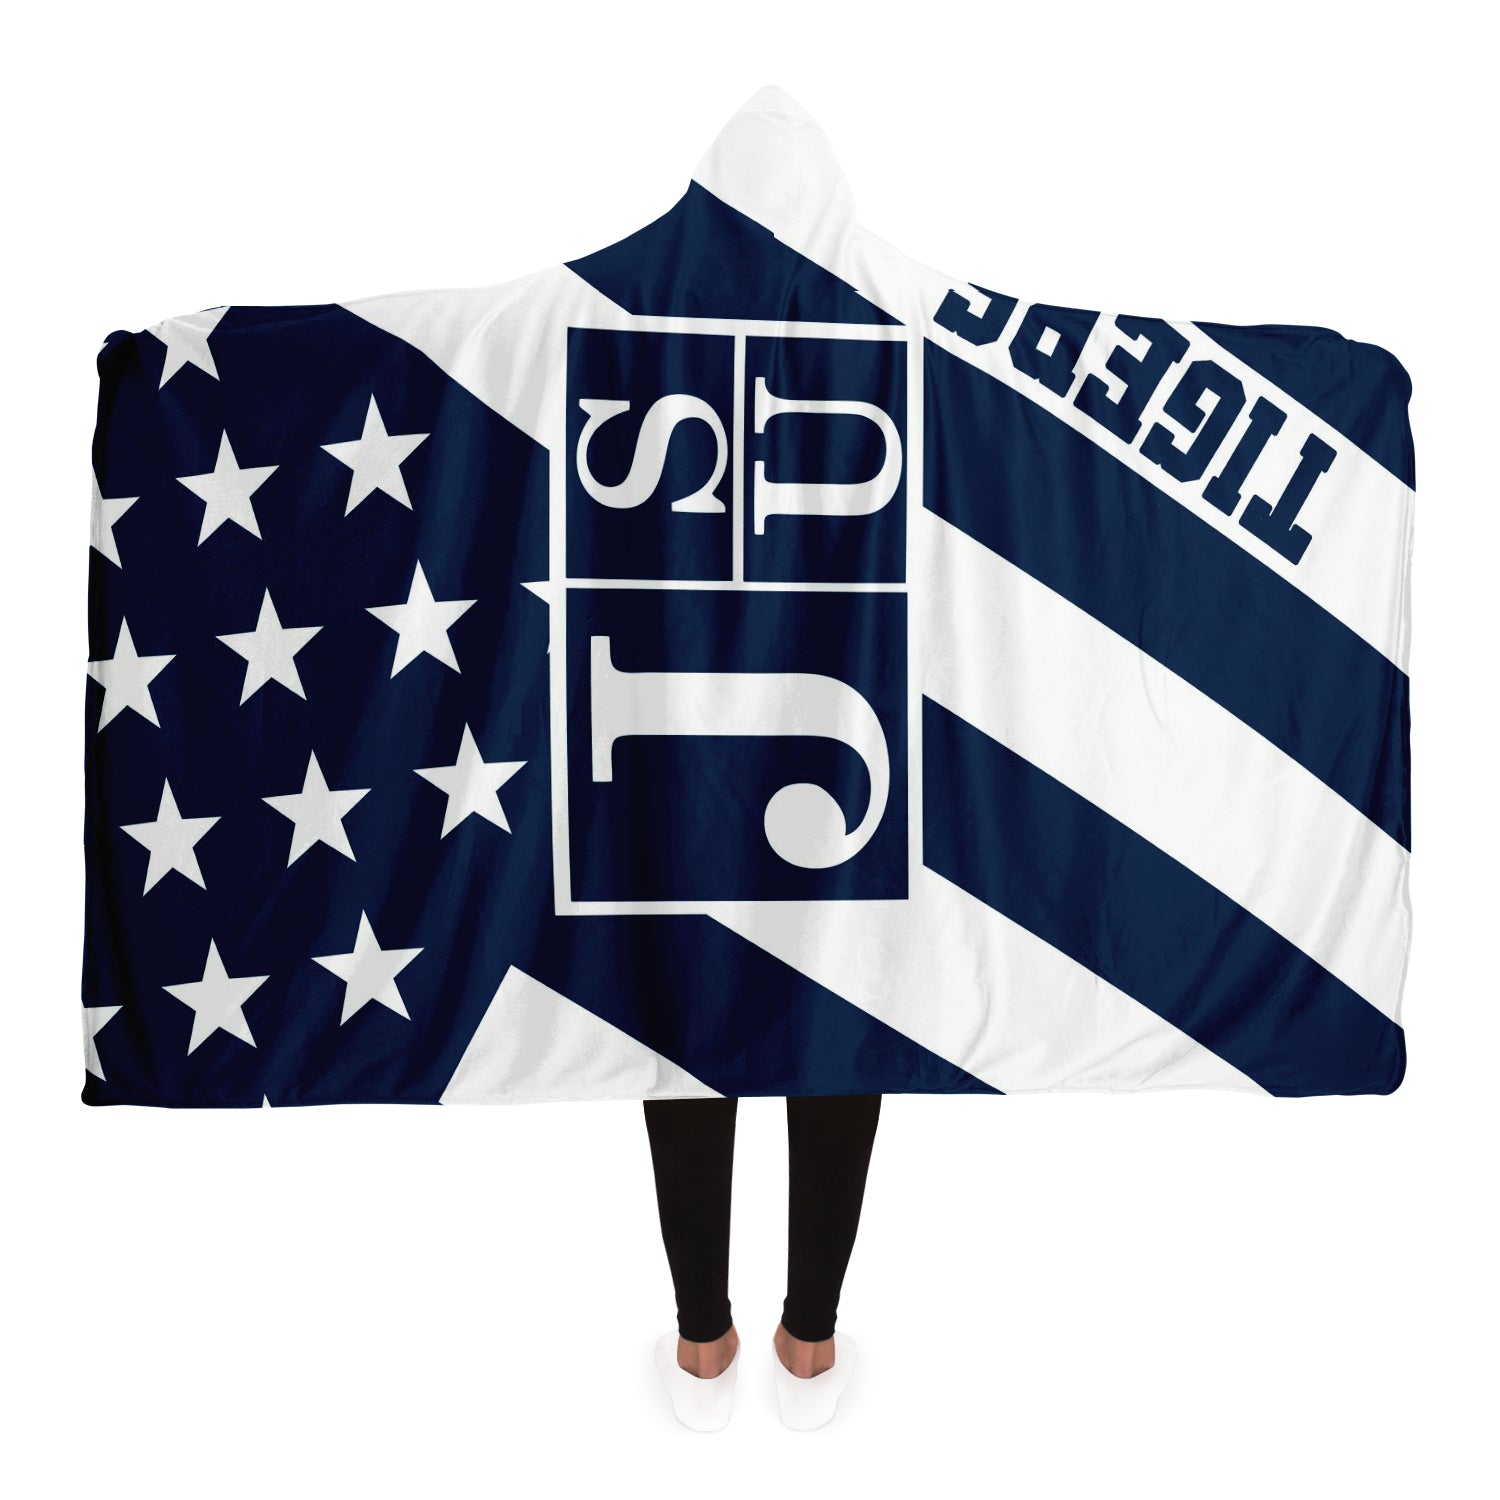 Jsu Tigers flag Hooded Blanket